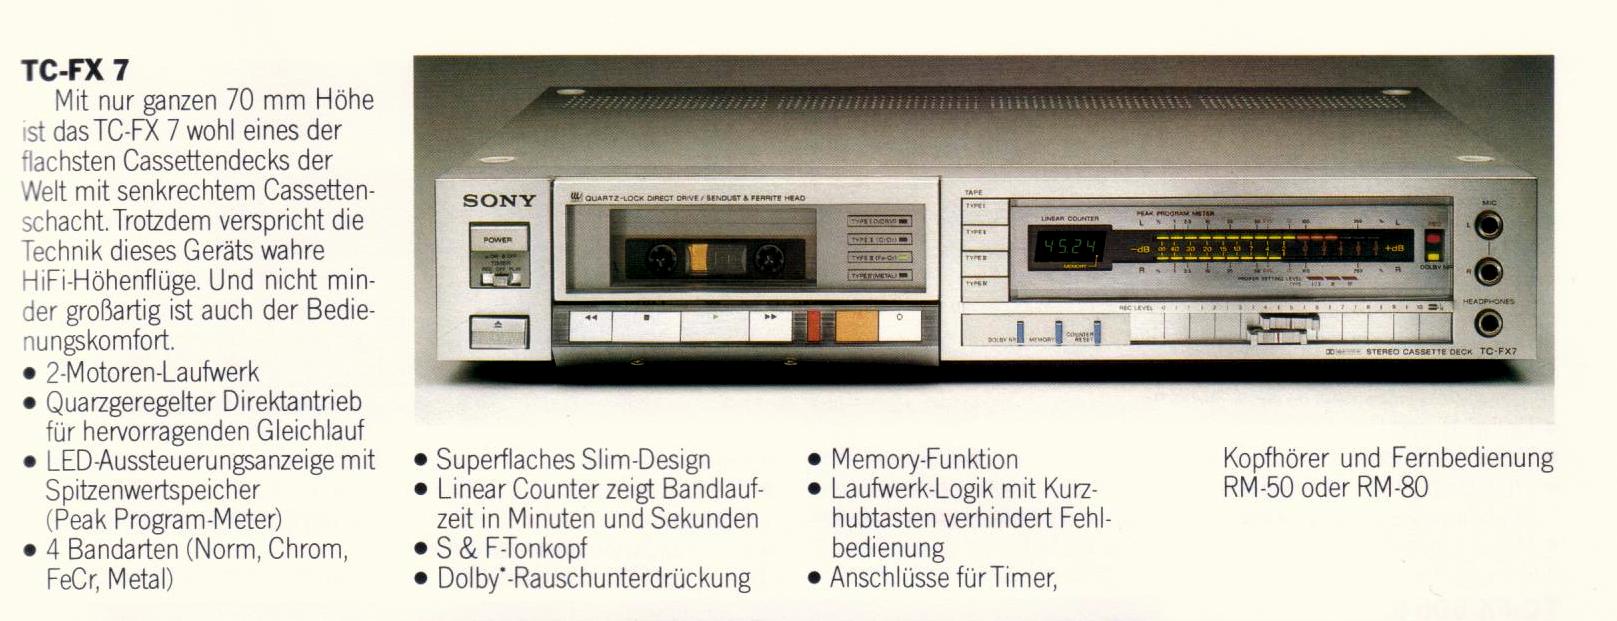 Sony TC-FX 7-Prospekt-1982.jpg